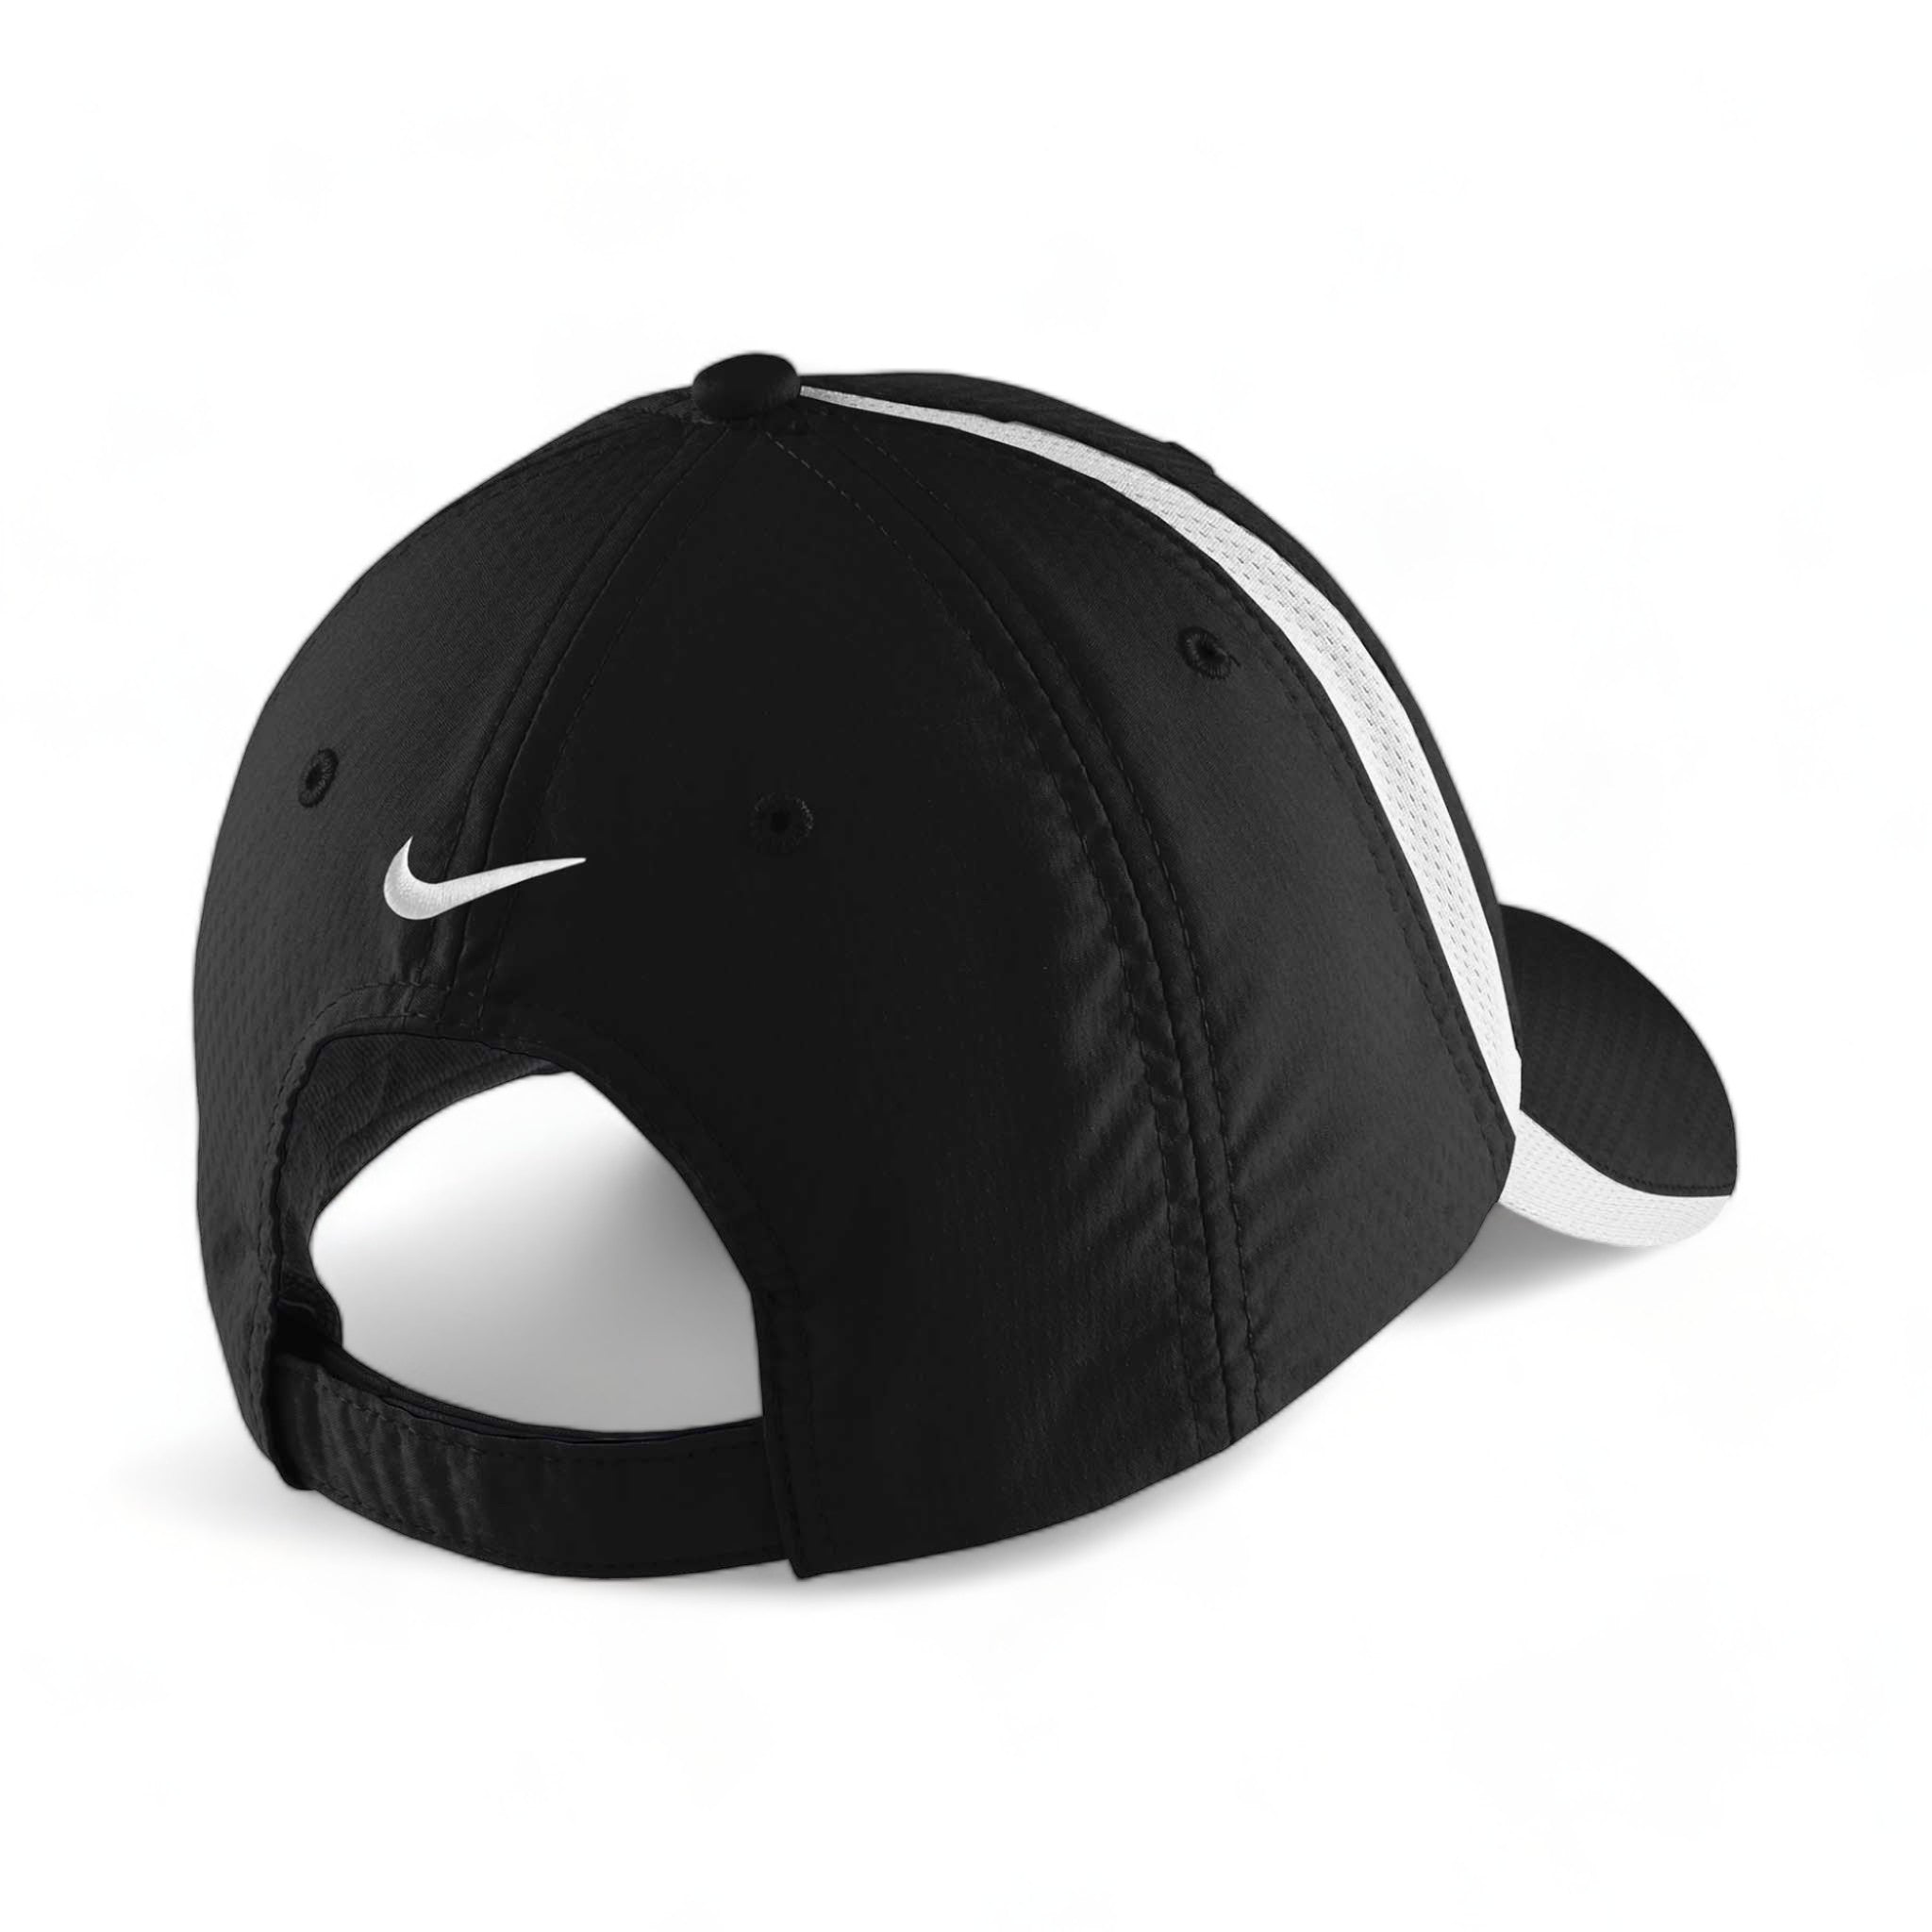 Back view of Nike NKFD9709 custom hat in black and white